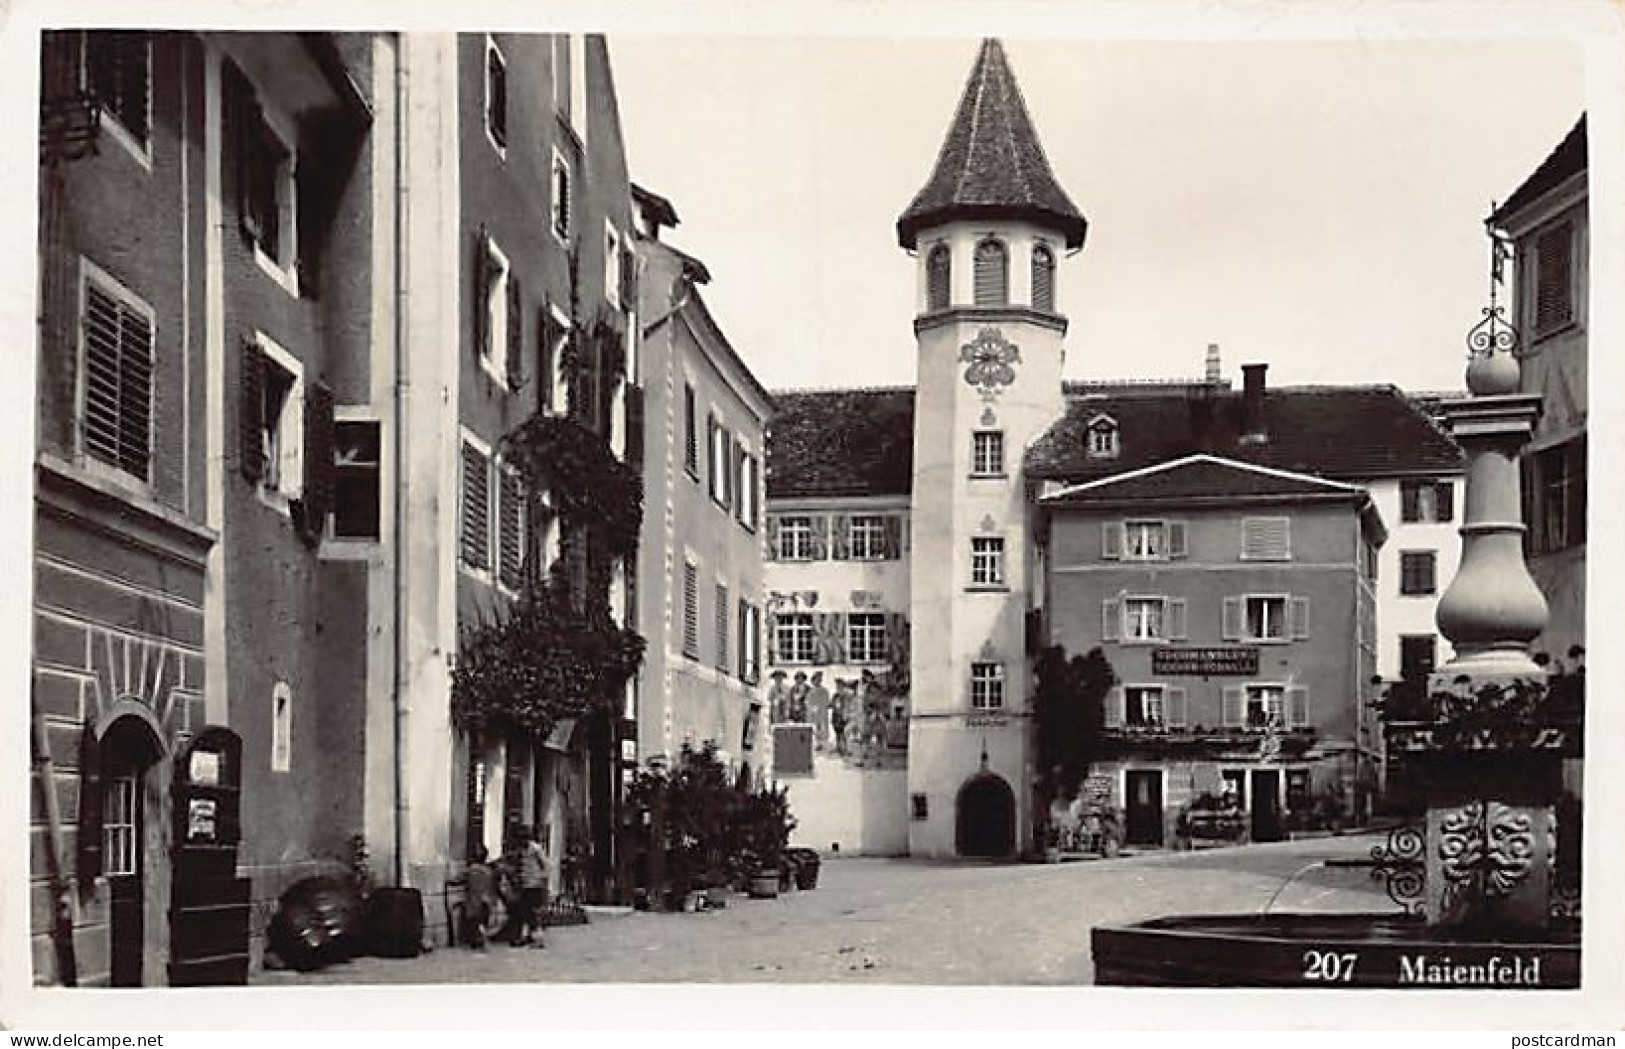 MAIENFELD (GR) Stadthaus - Verlag Edm. Petzer 207 - Maienfeld